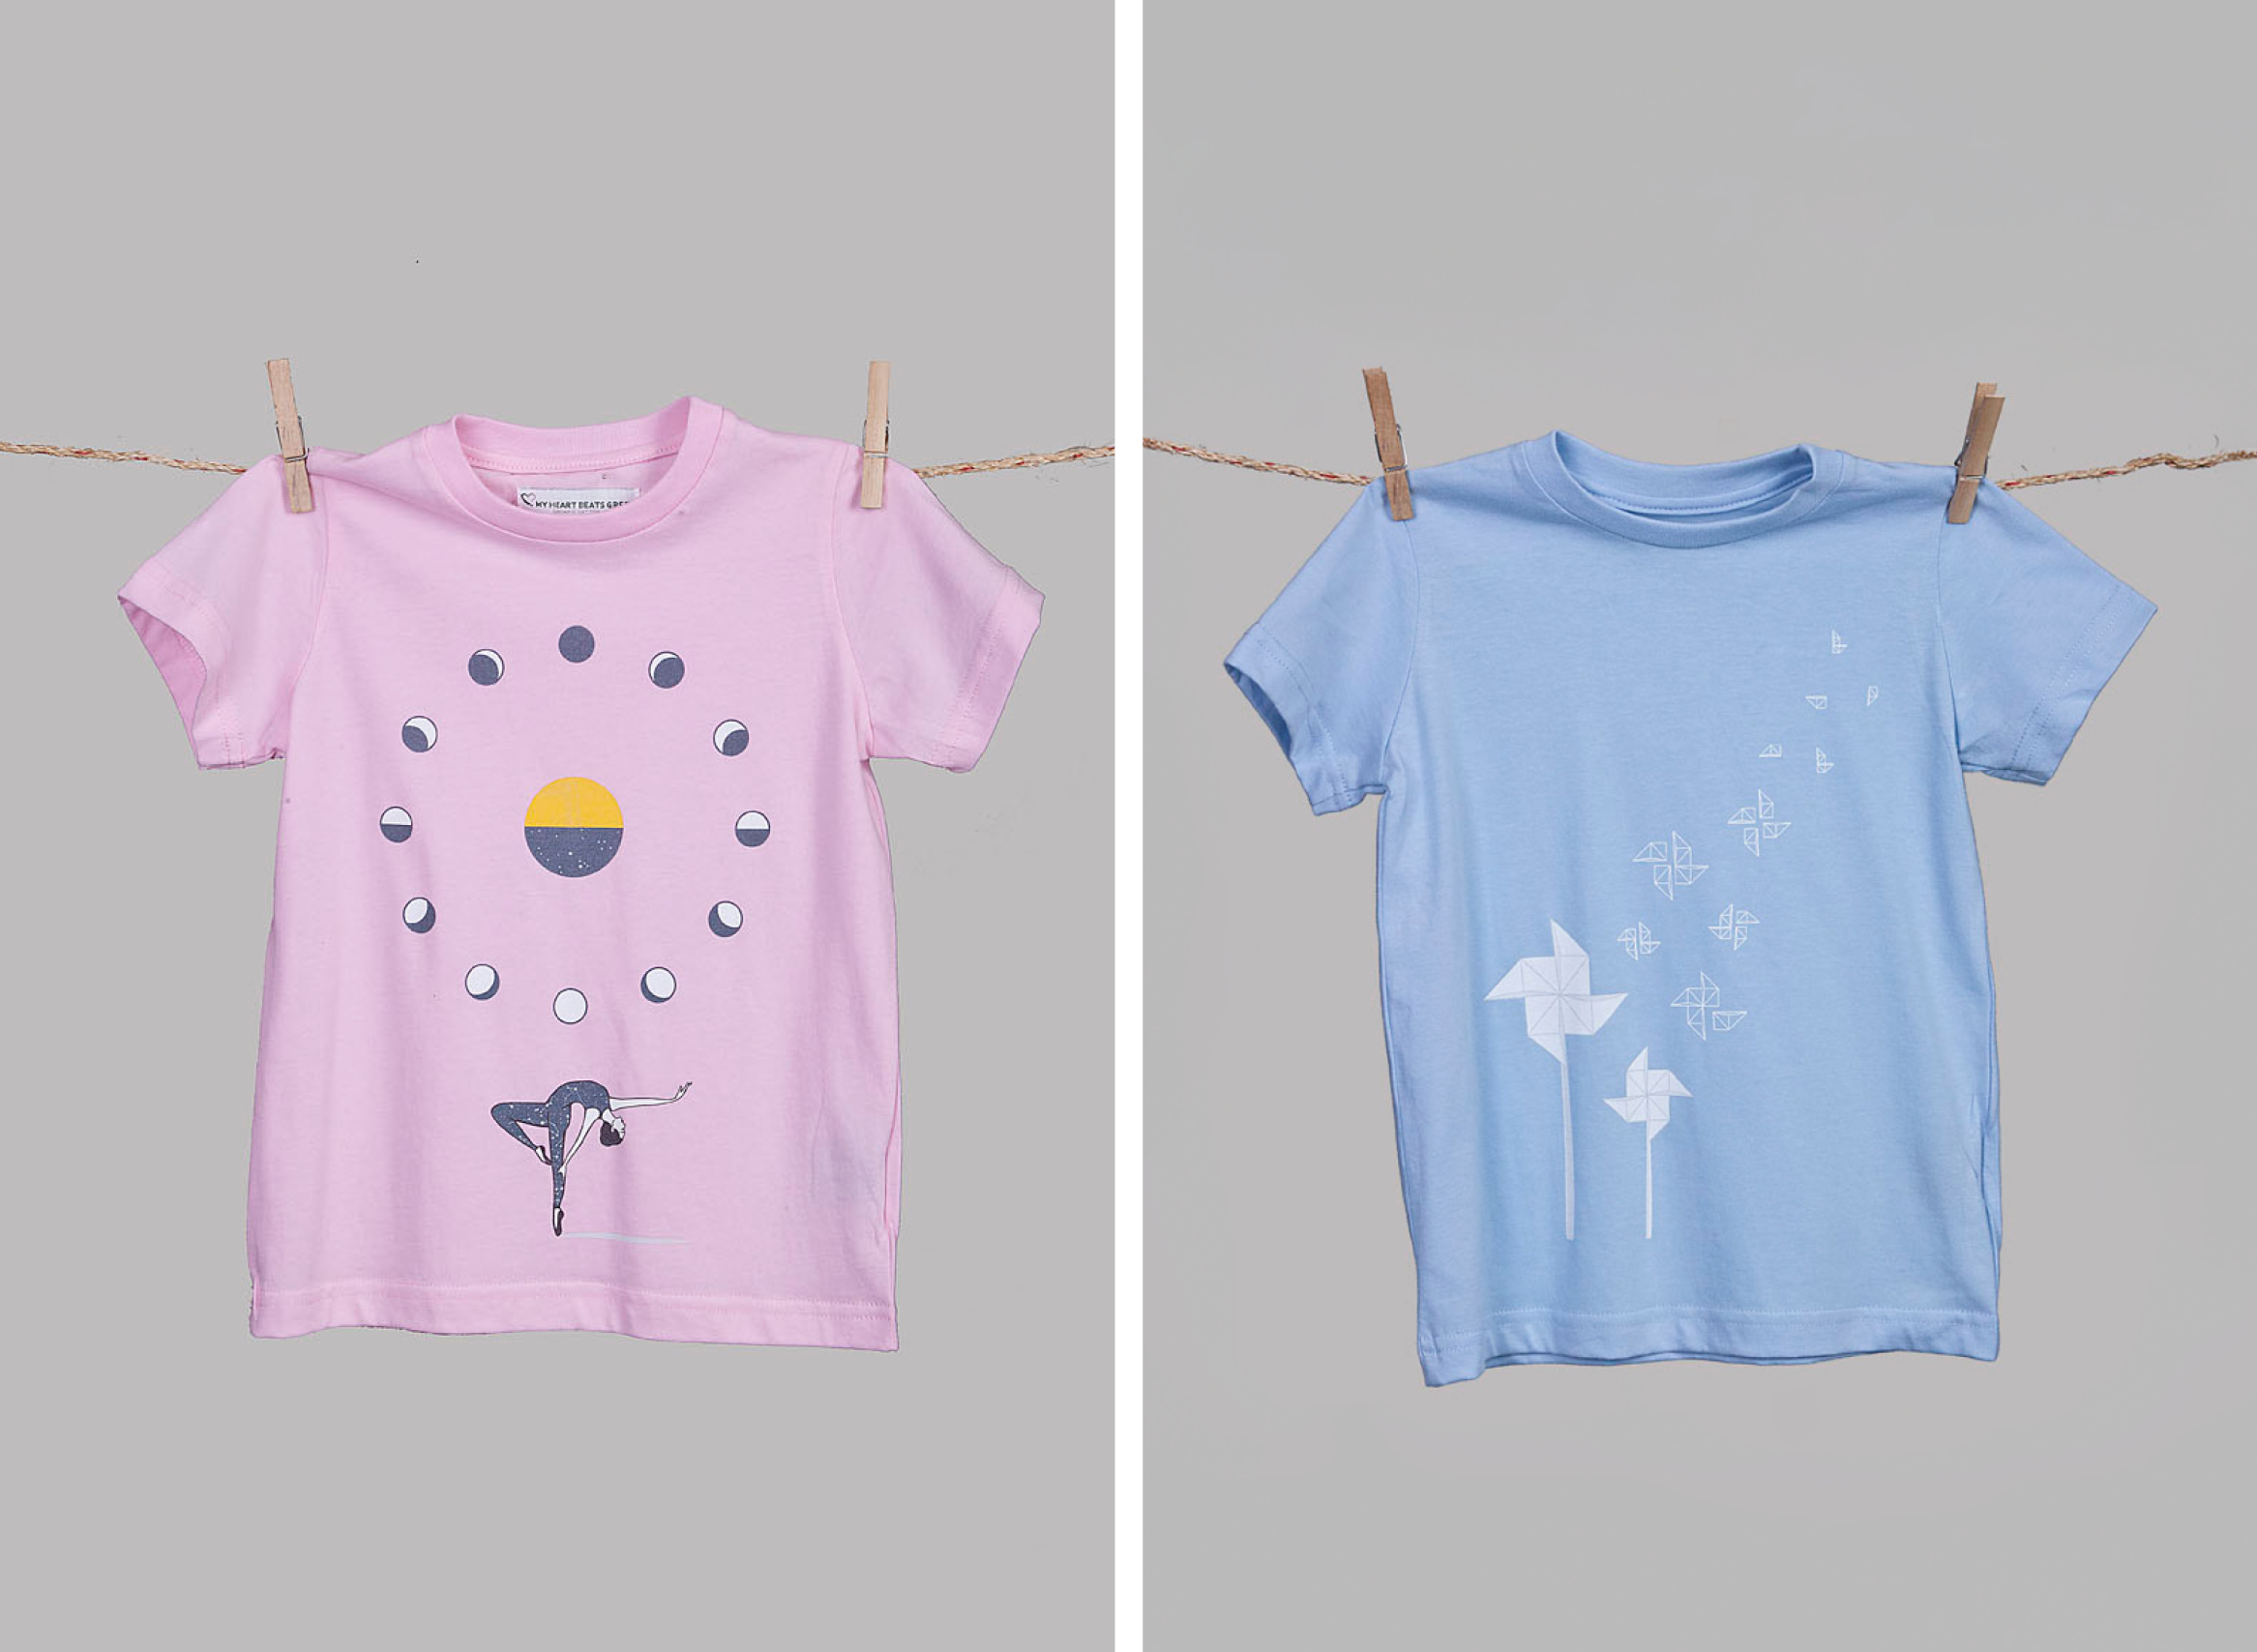 bella luna and windfarm childrens shirt